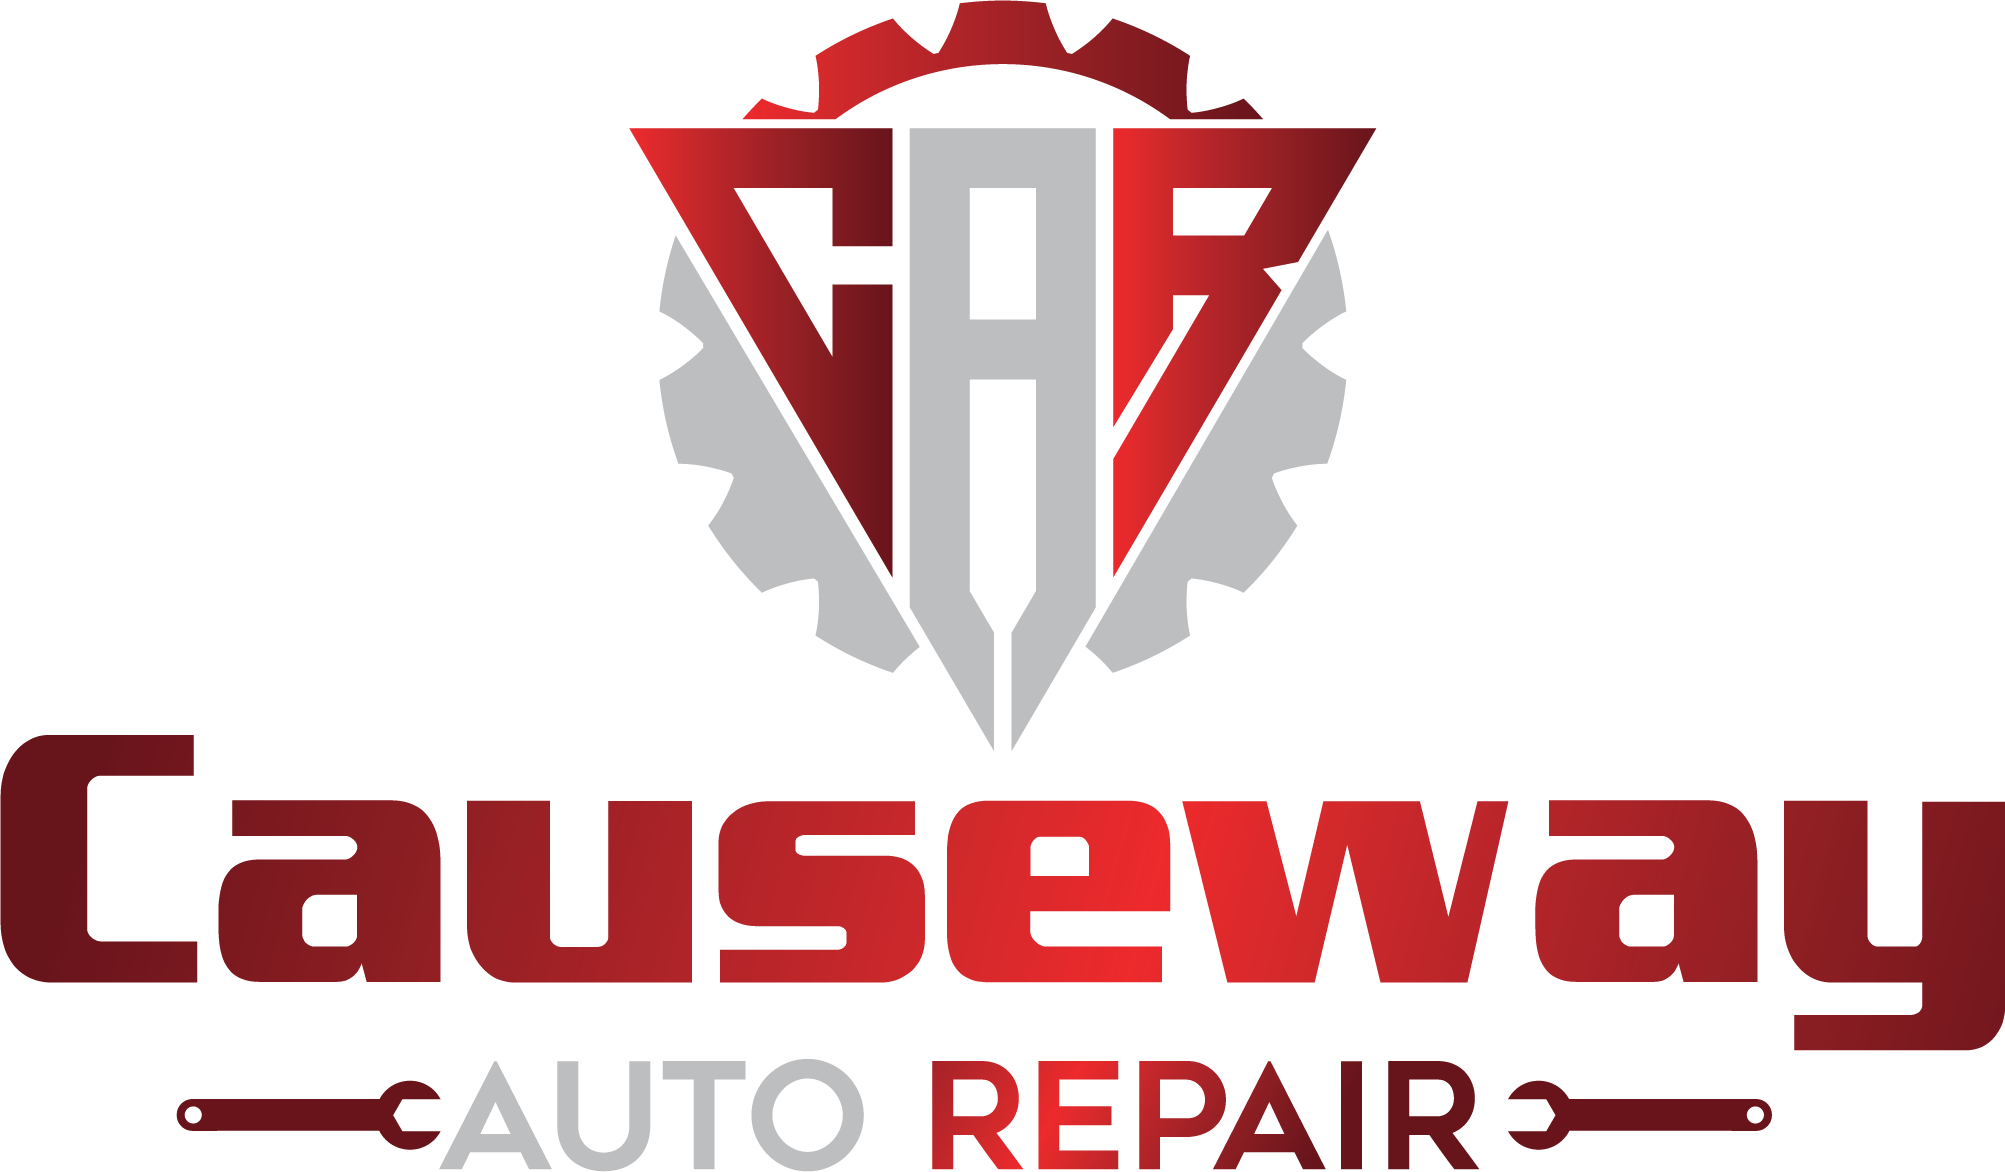 Causeway Auto Repair - 4 Recommendations - Ruskin, FL